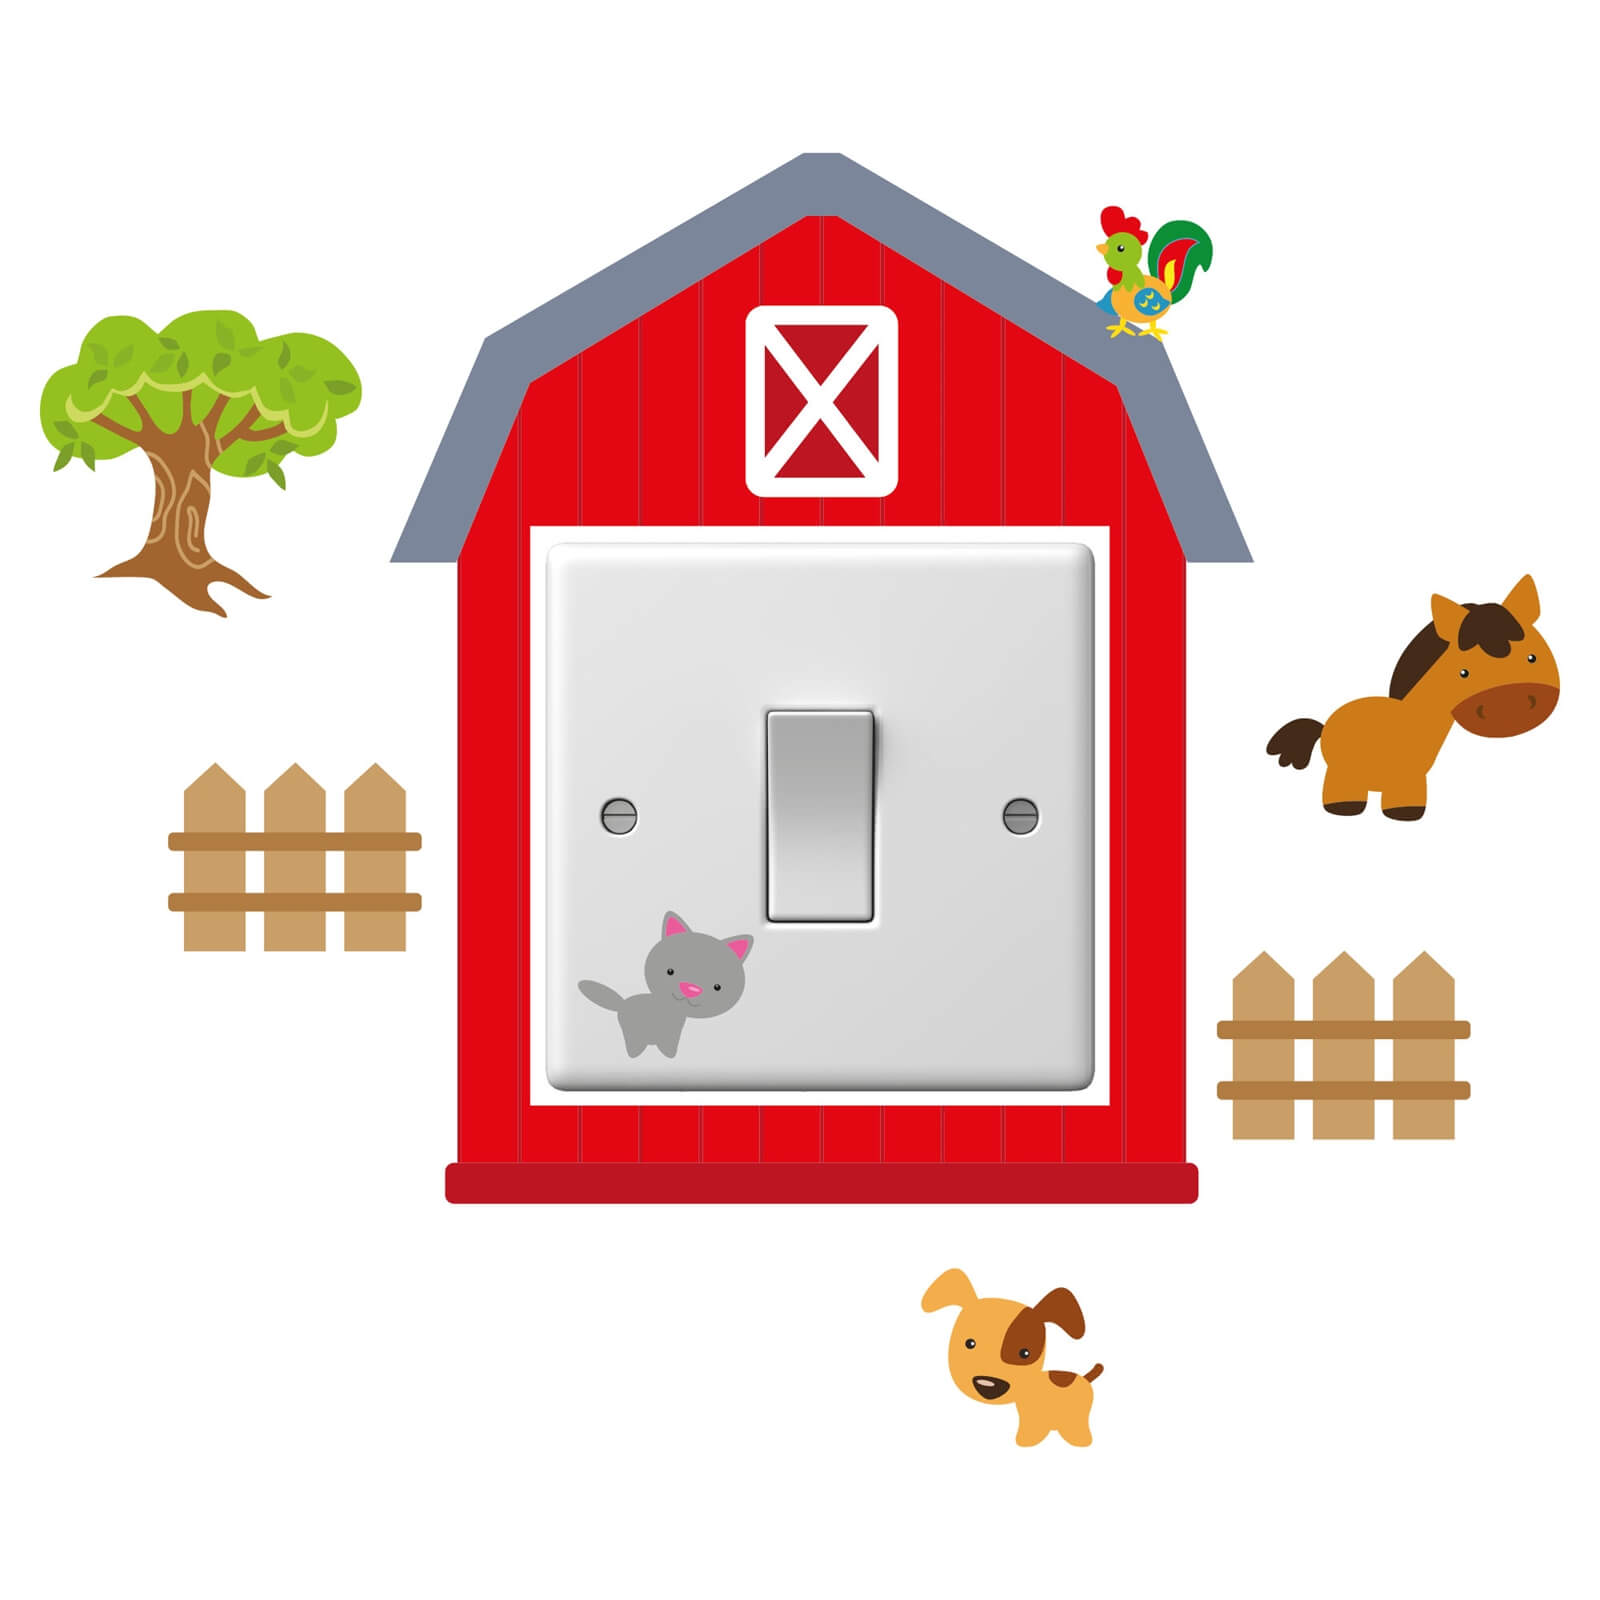 Light Switch Art Stickers - Farm Animals